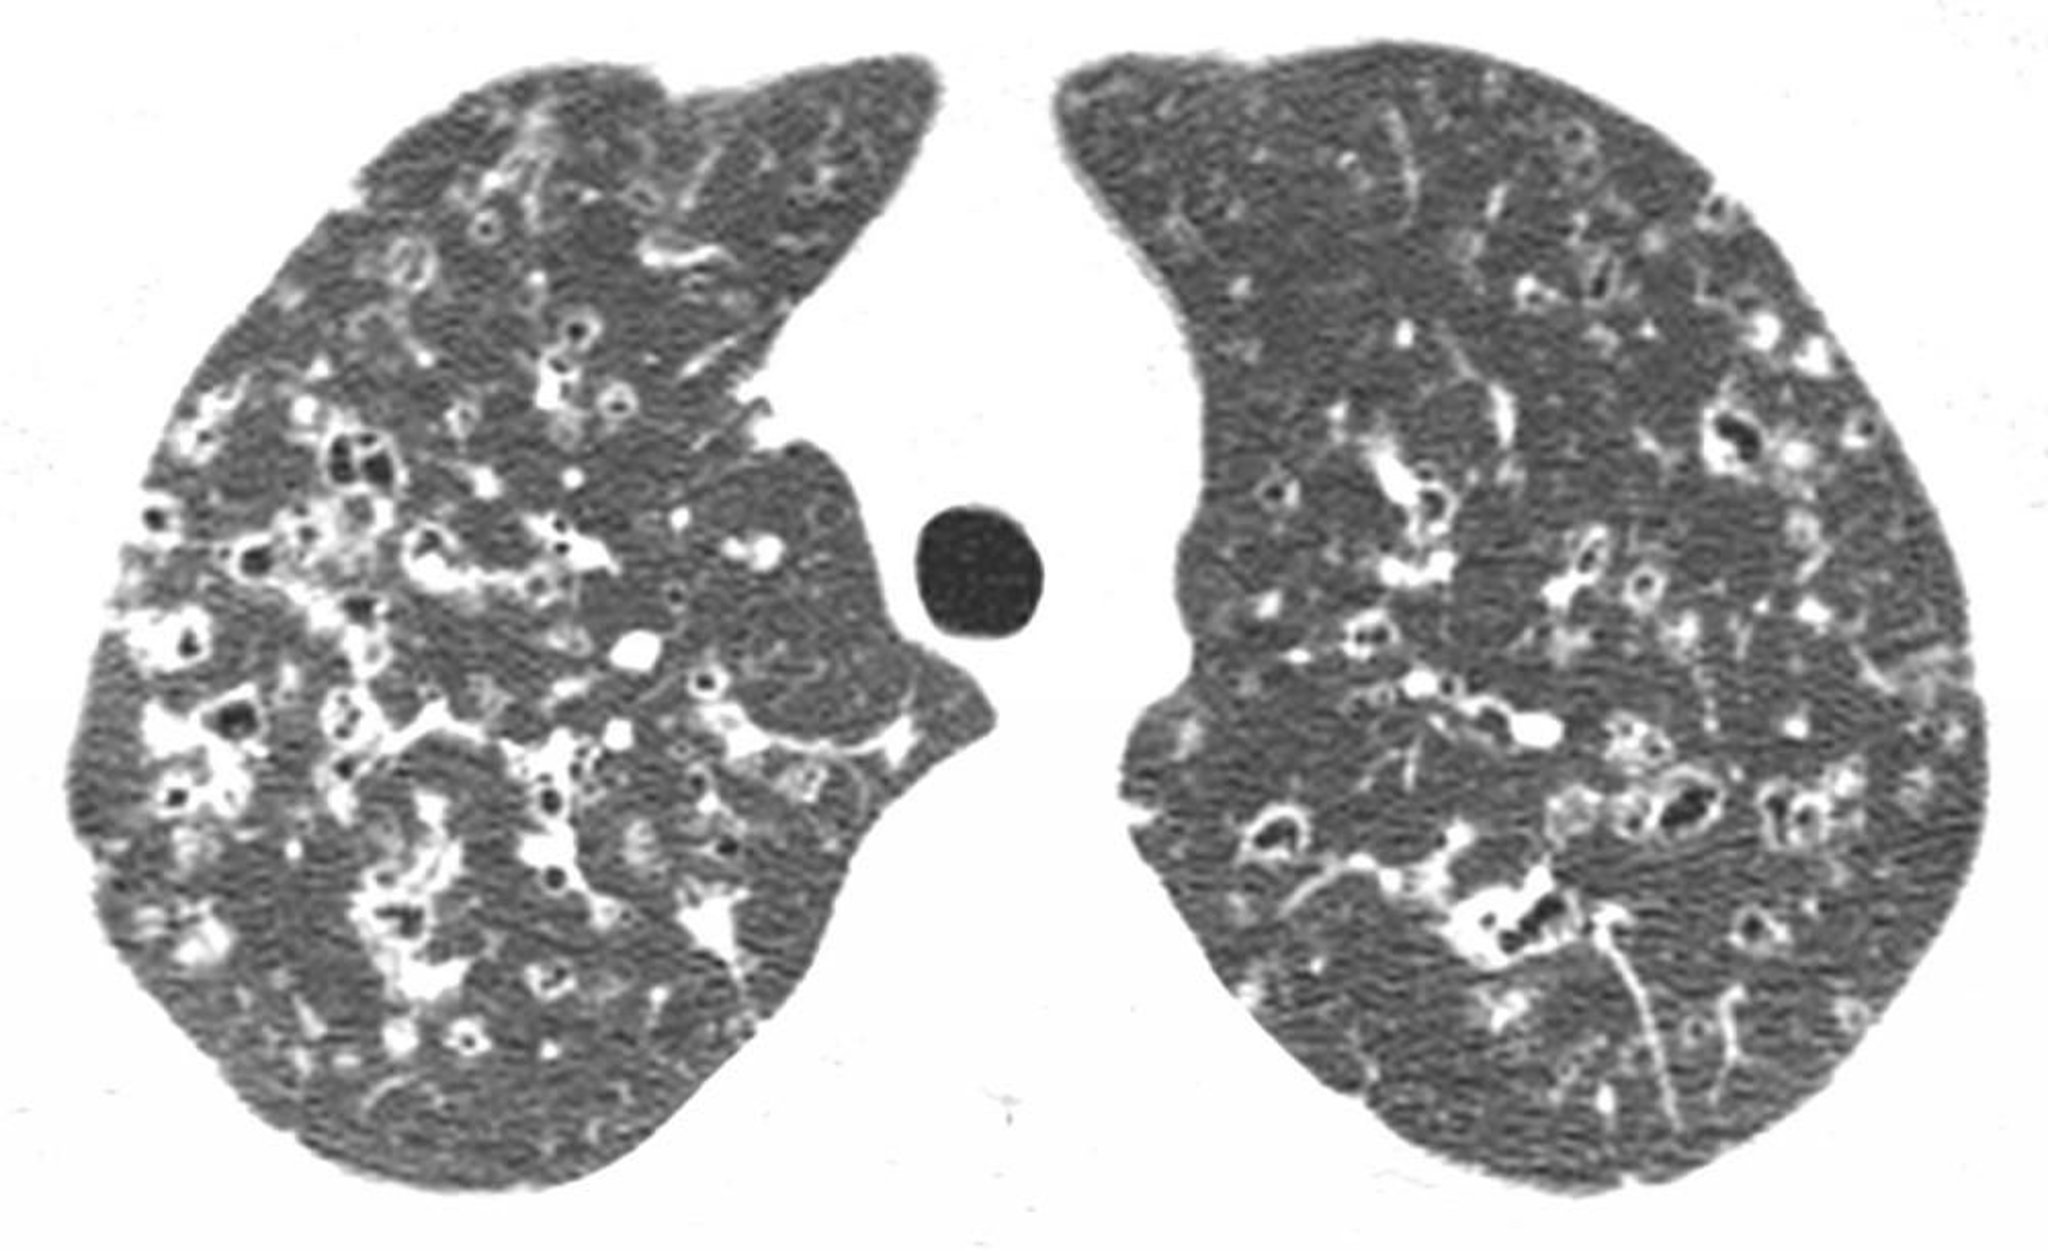 Histiocitosis pulmonar de células de Langerhans